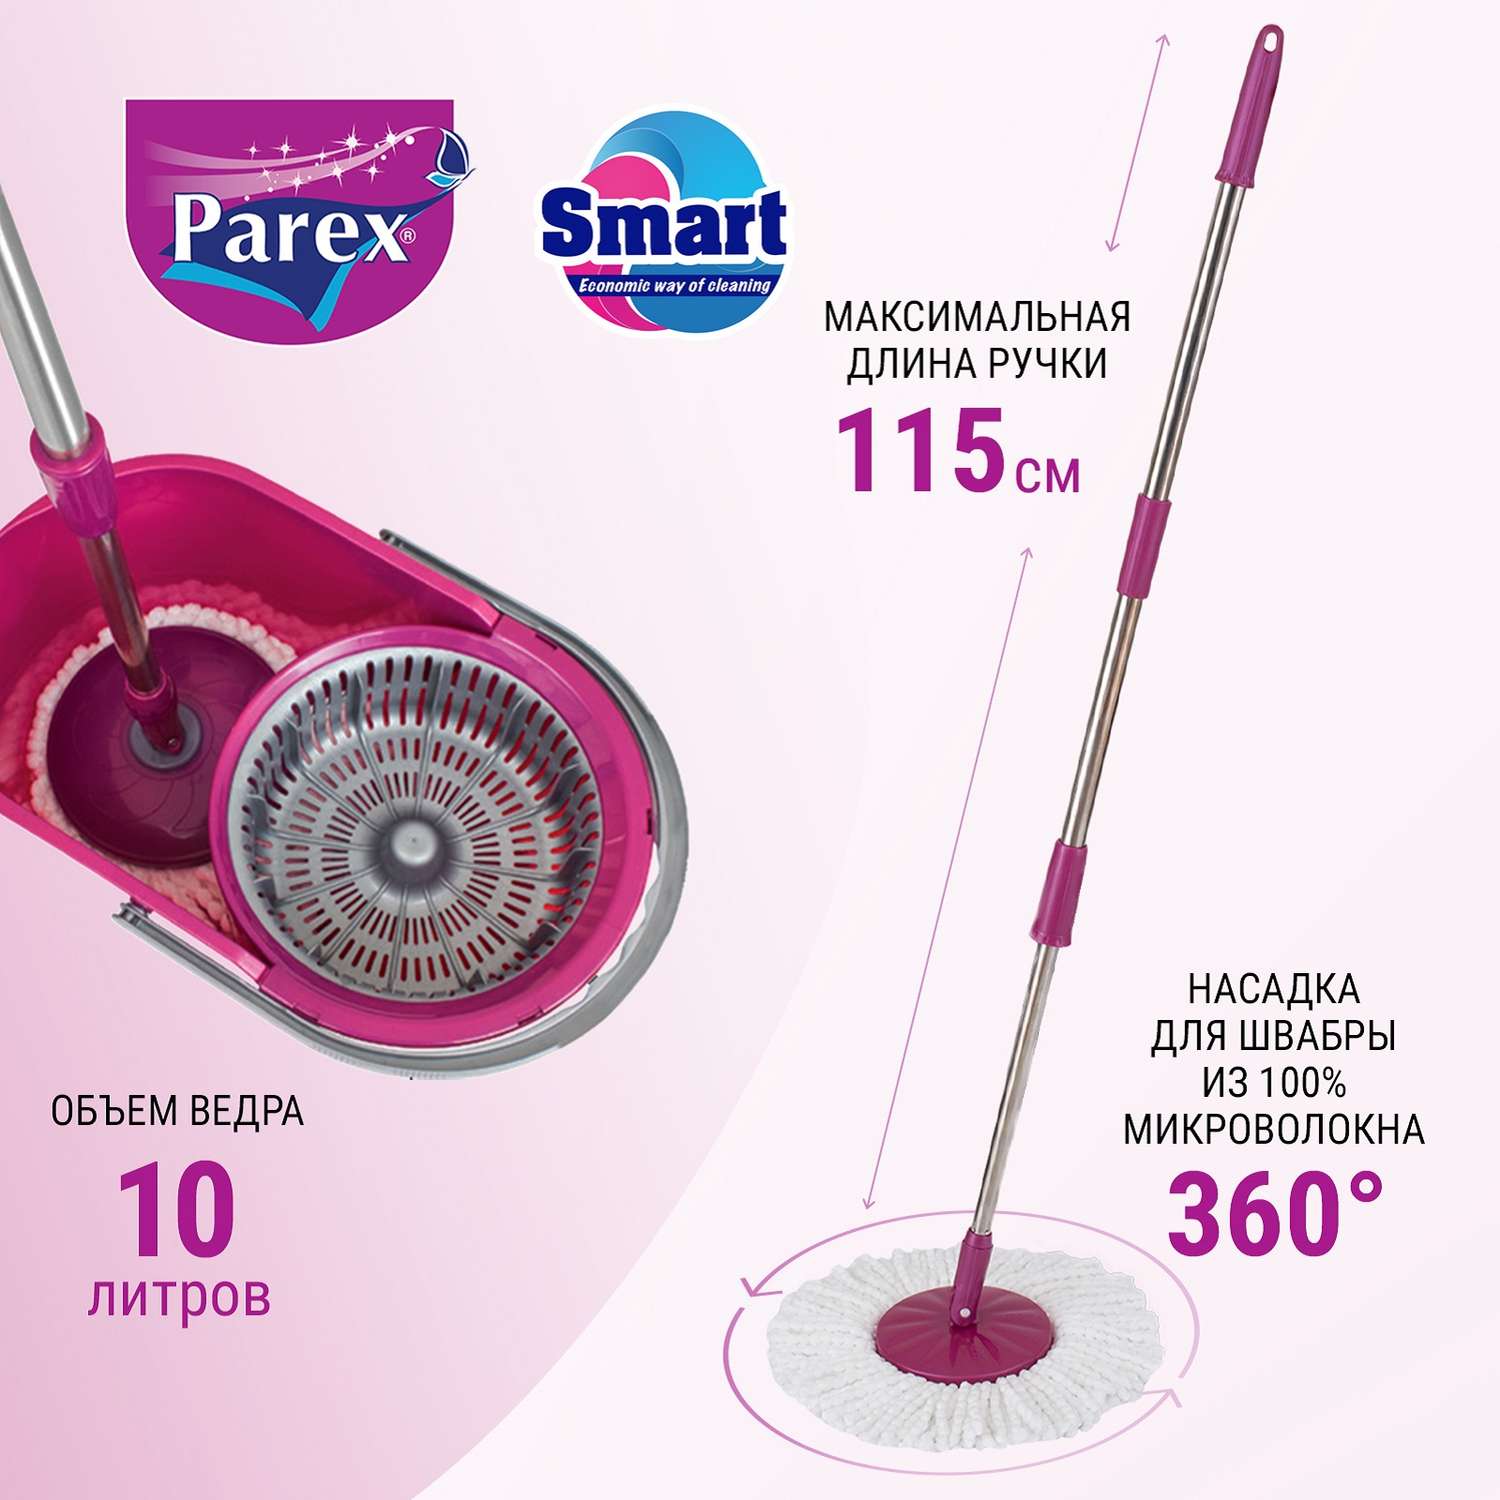 Комплект для уборки Parex с автоотжимом Smart 360° 1 шт - фото 3